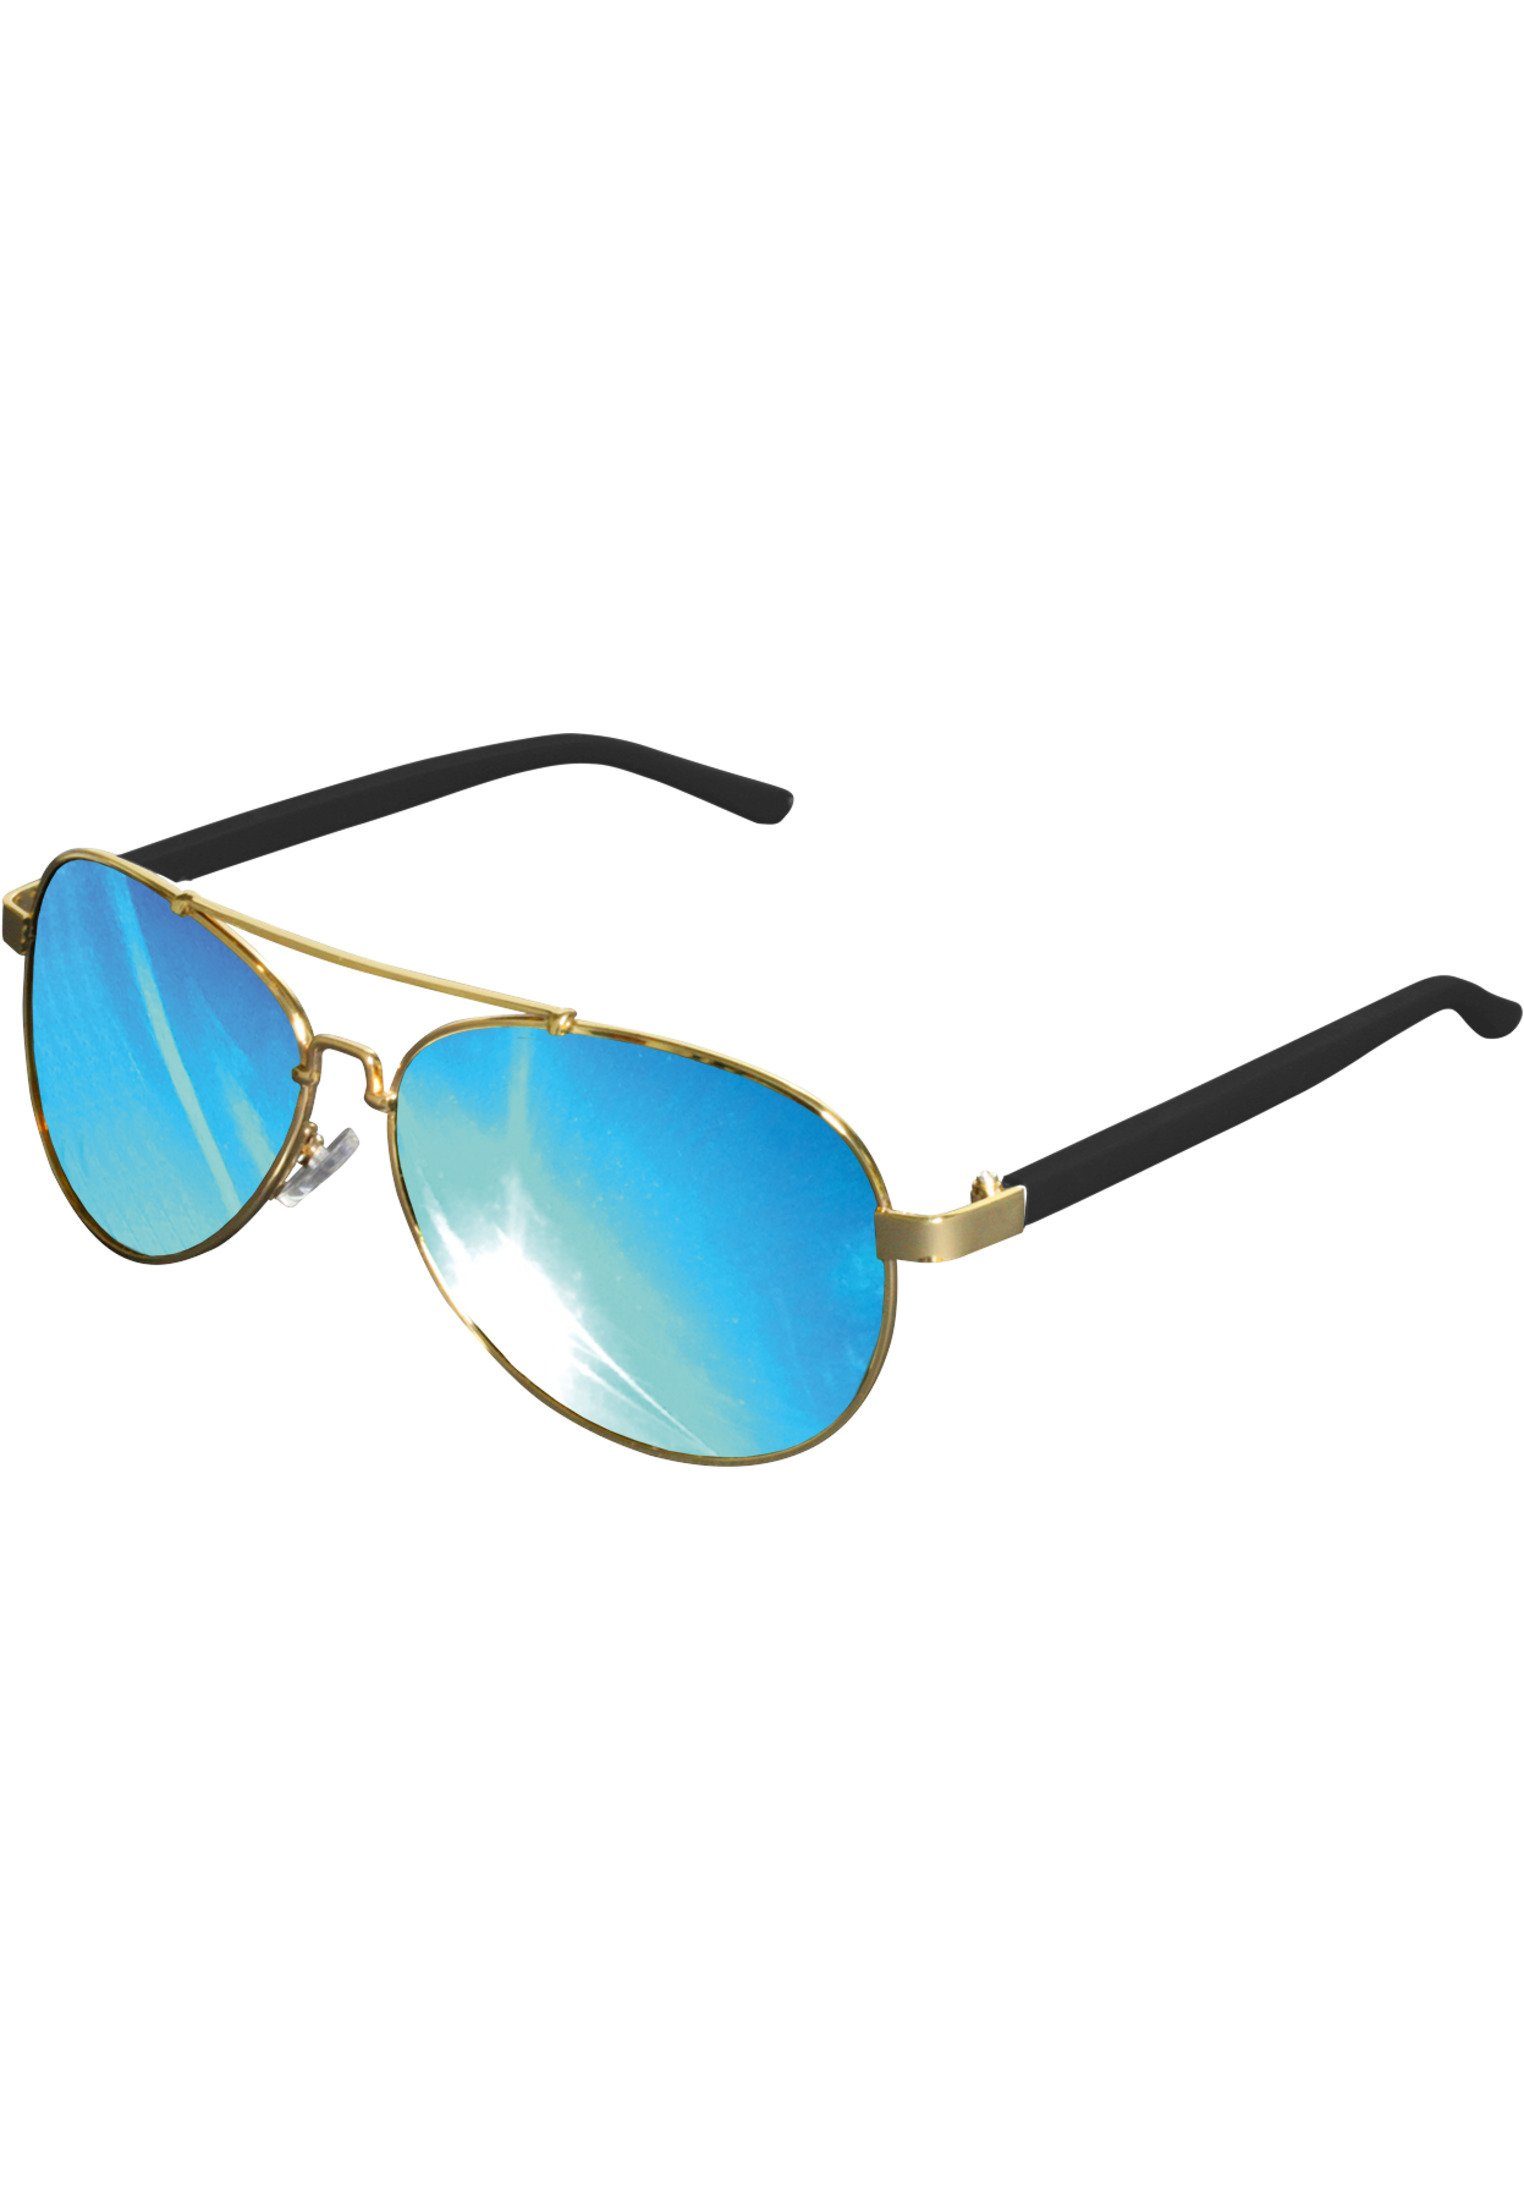 MSTRDS Sonnenbrille Accessoires Sunglasses Mirror Mumbo gold/blue